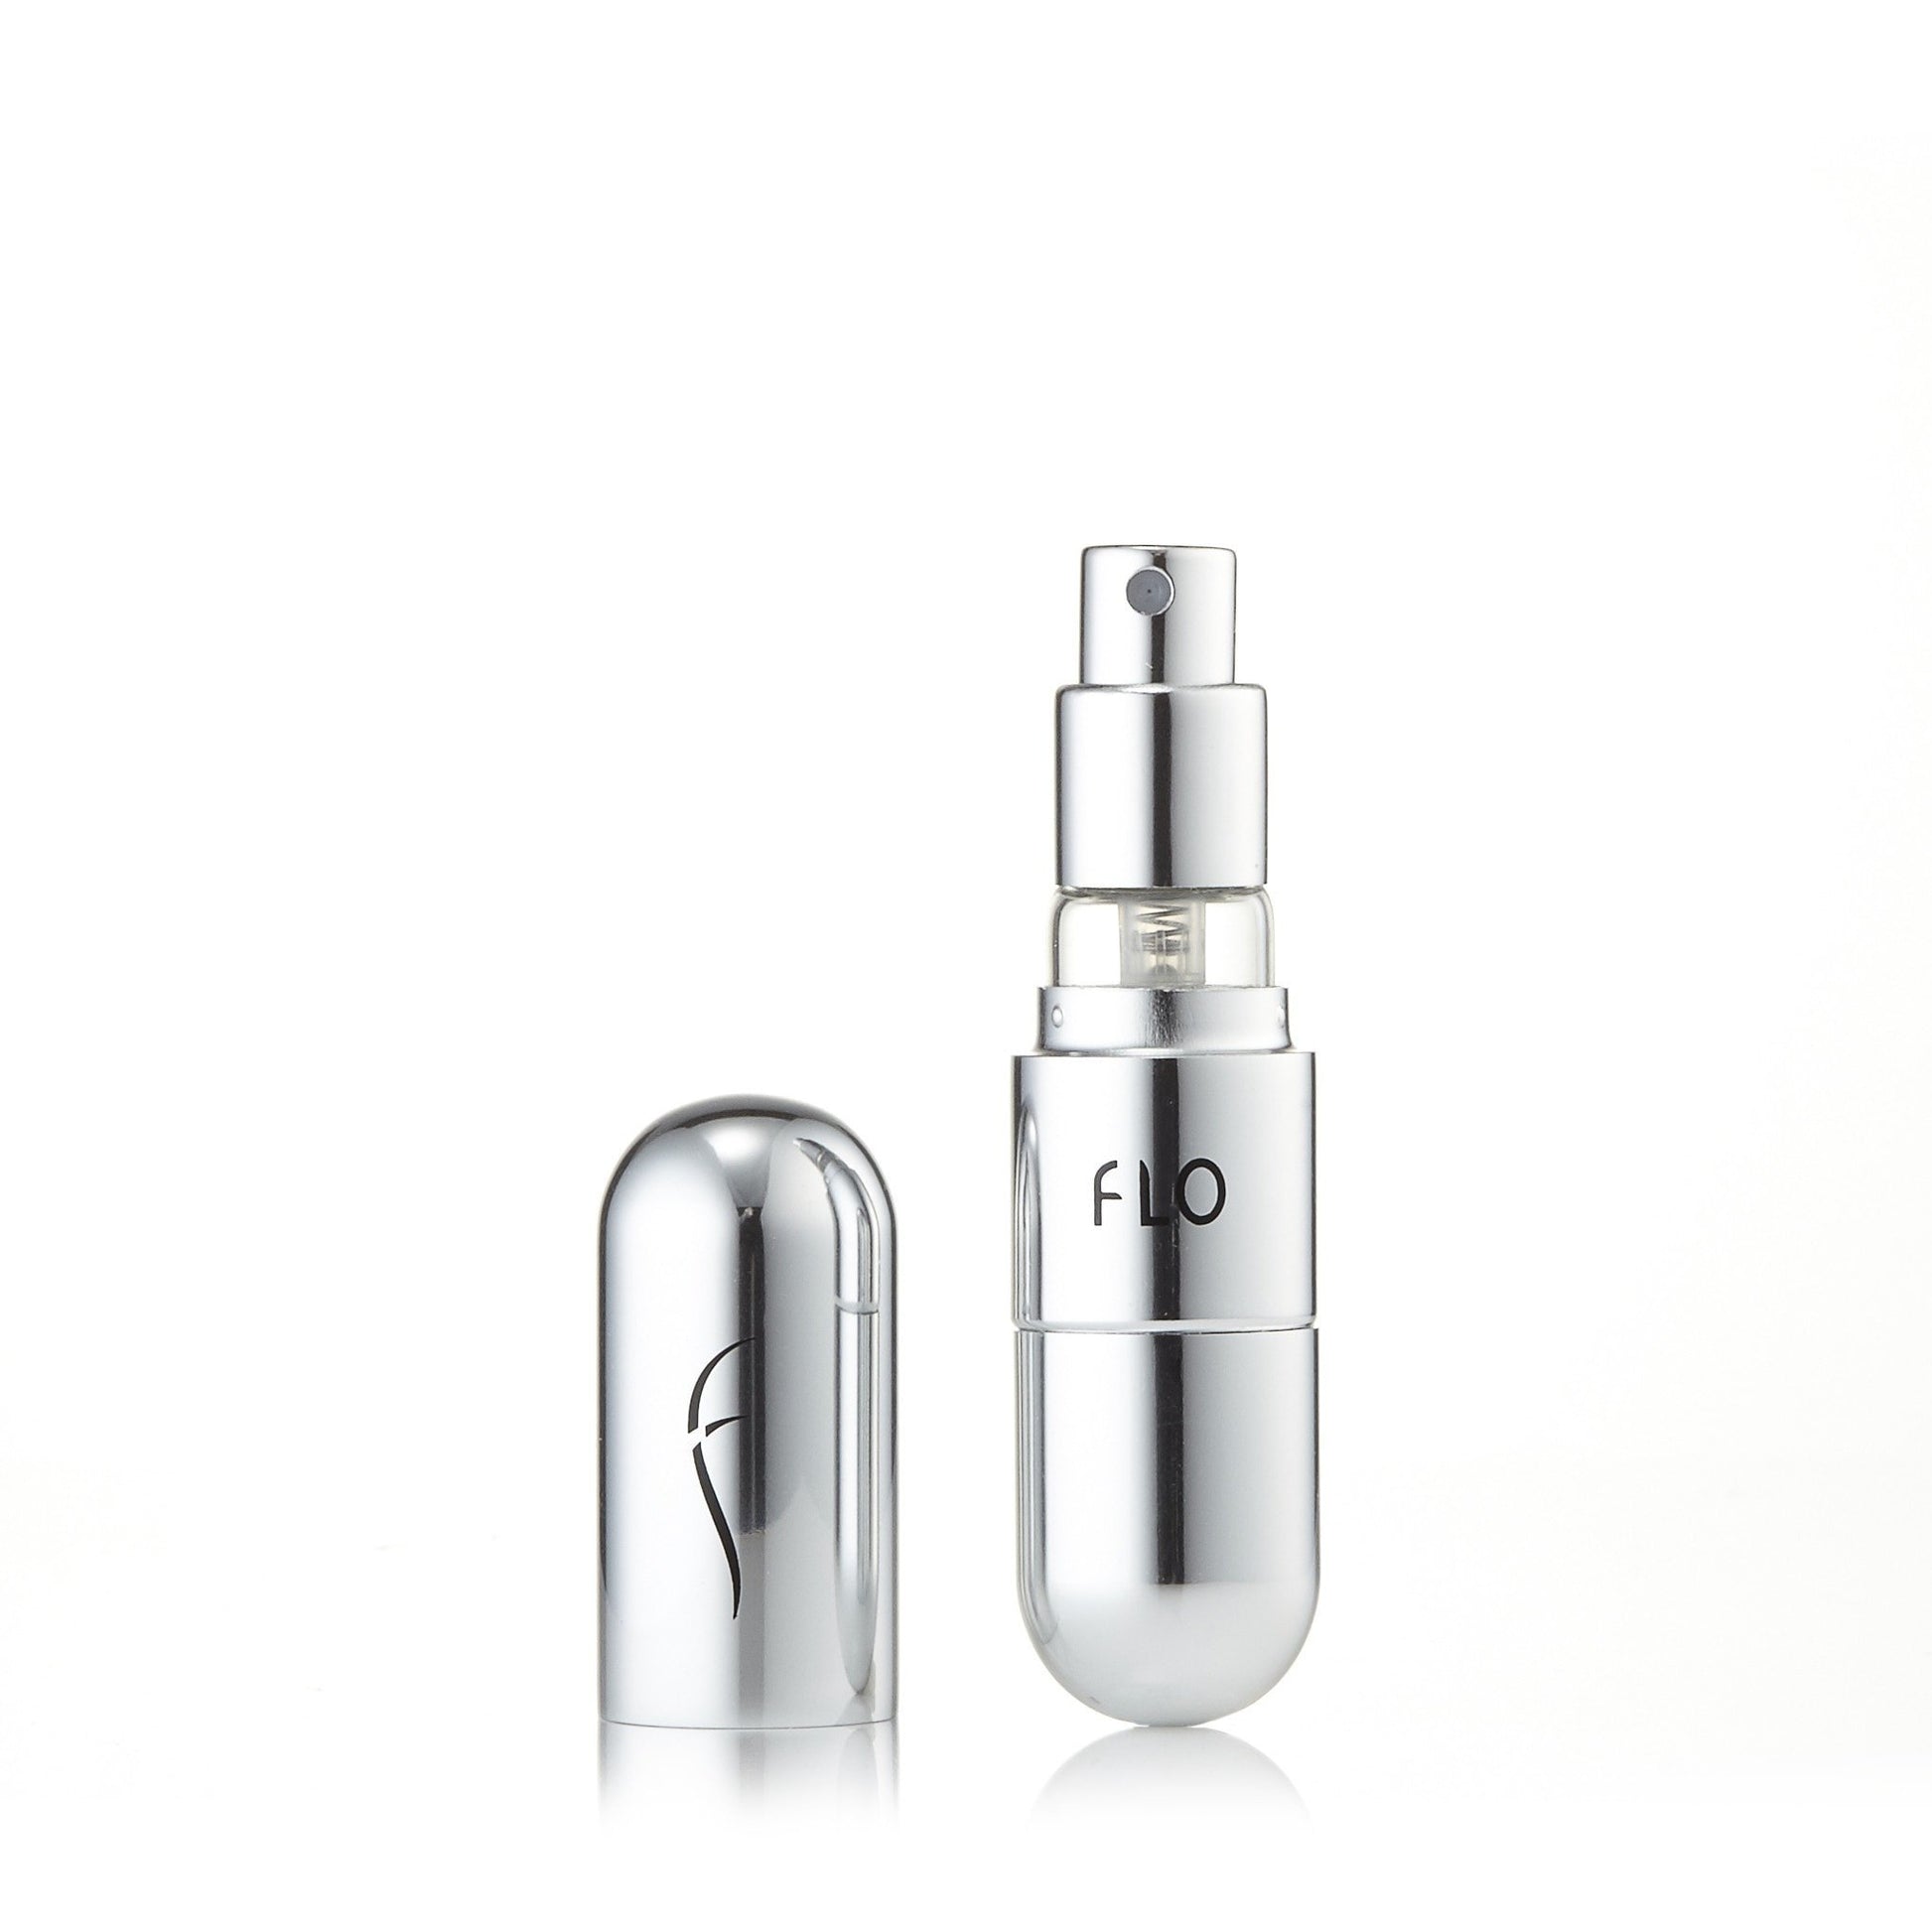 Flo Atomizer Fragrance Outlet Spray Prestige –